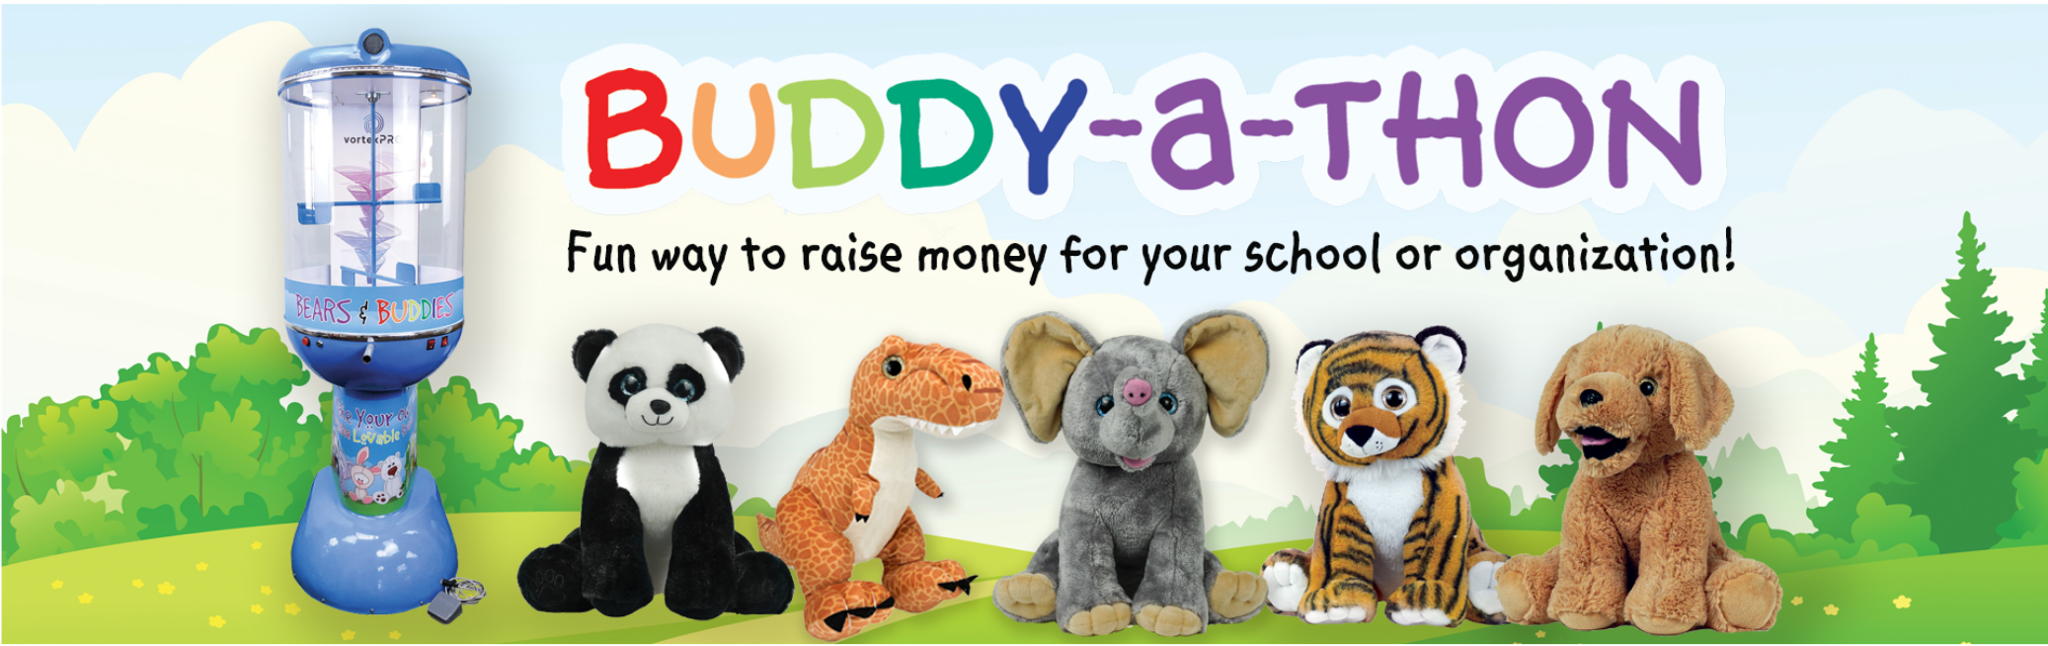 Buddy-a-thon fundraiser banner